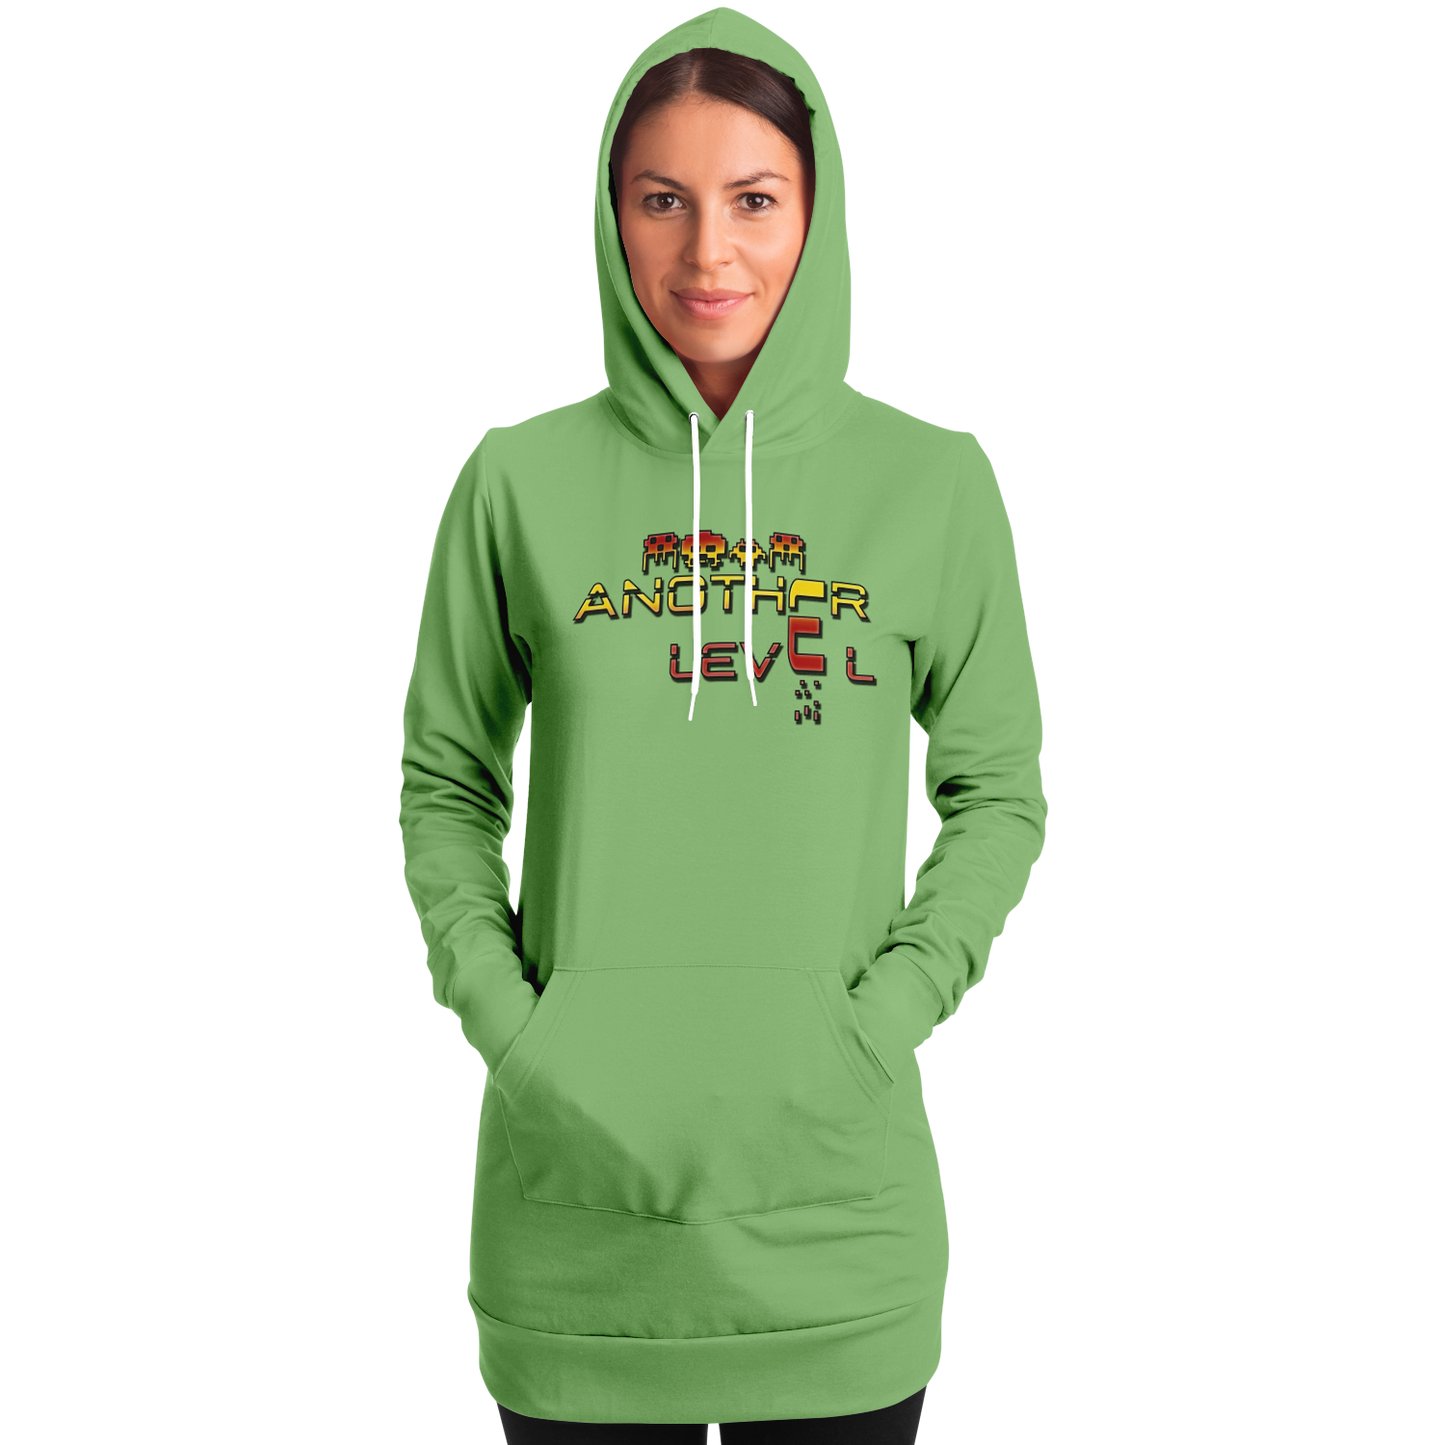 fz women's fashionable hoodie dress